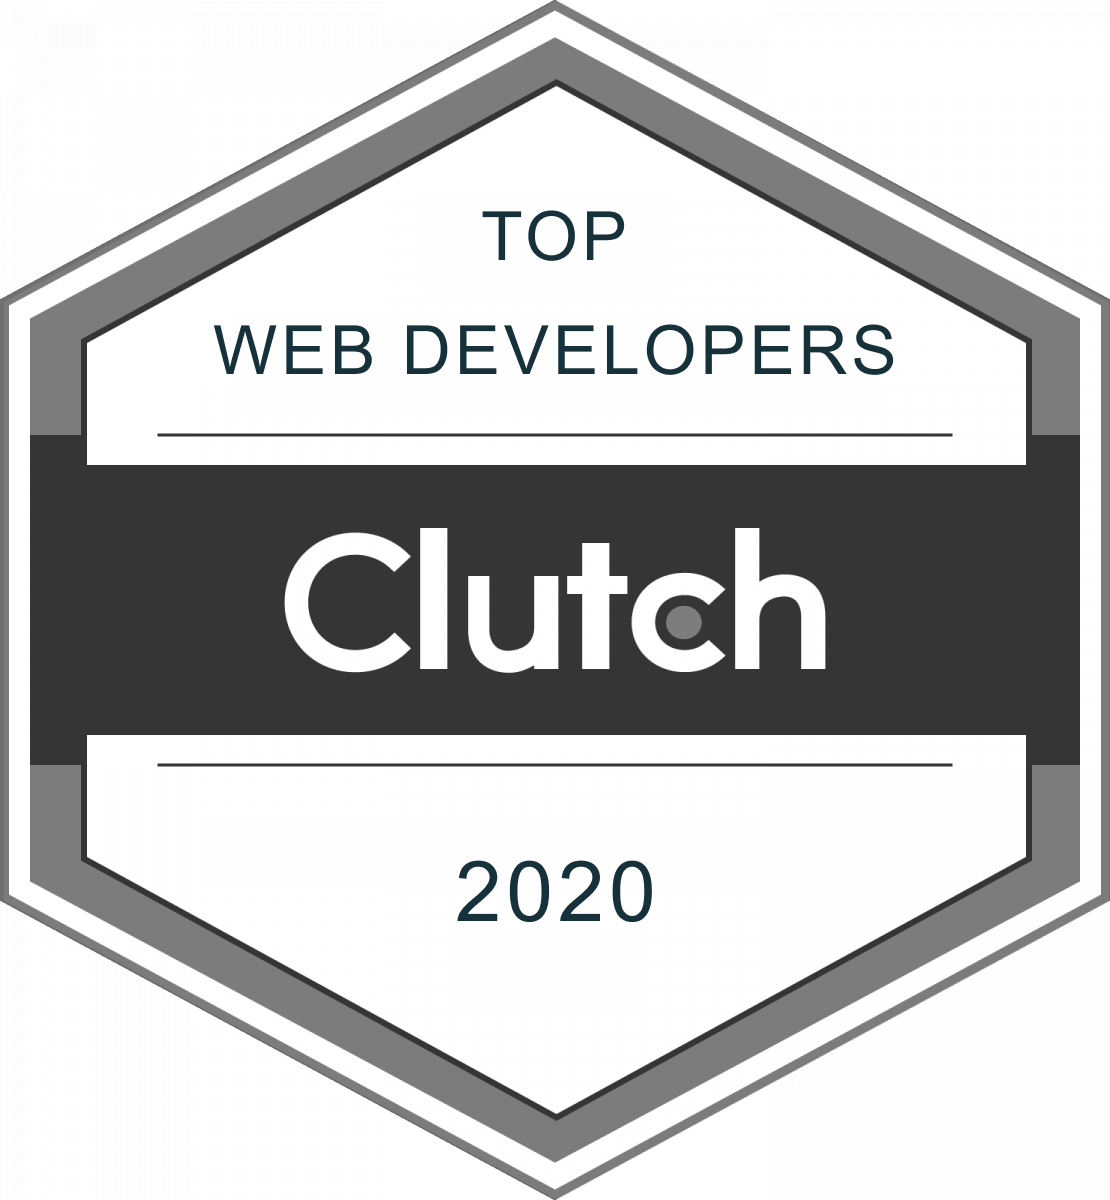 Top Web Developers 2020